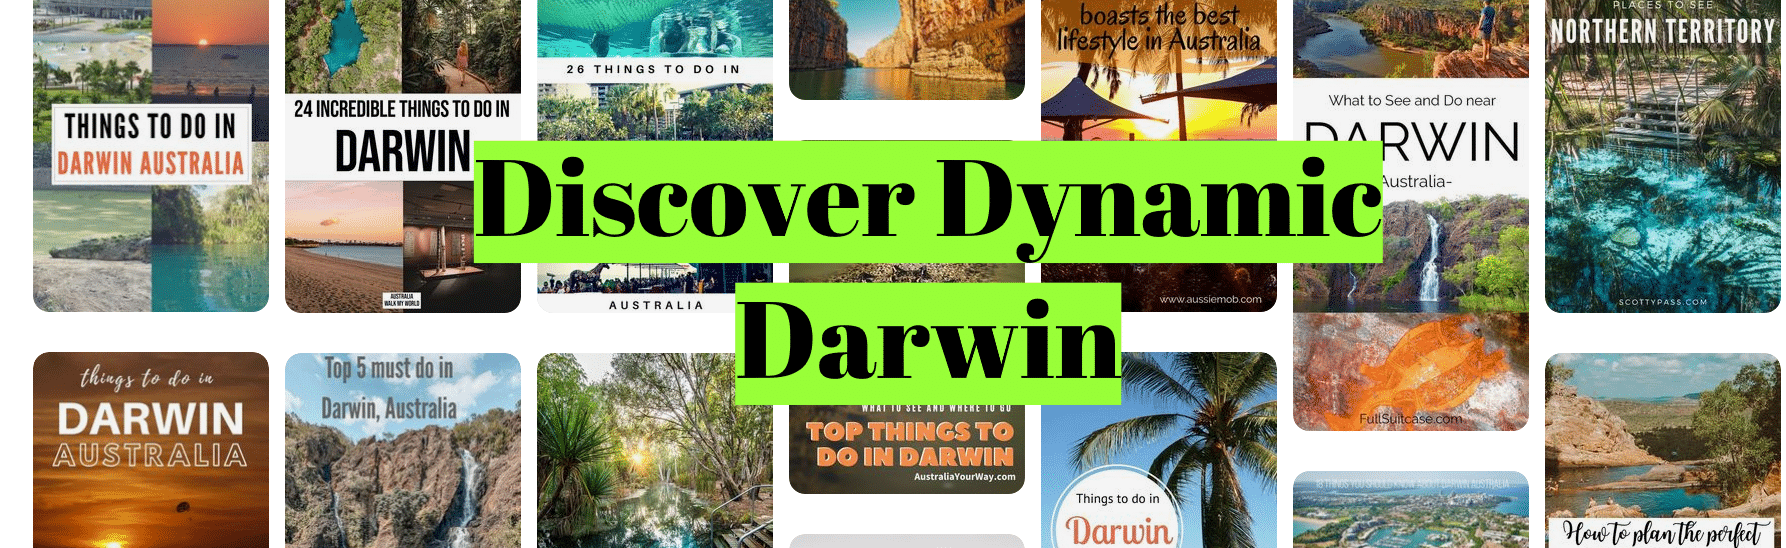 Discover Dynamic Darwin